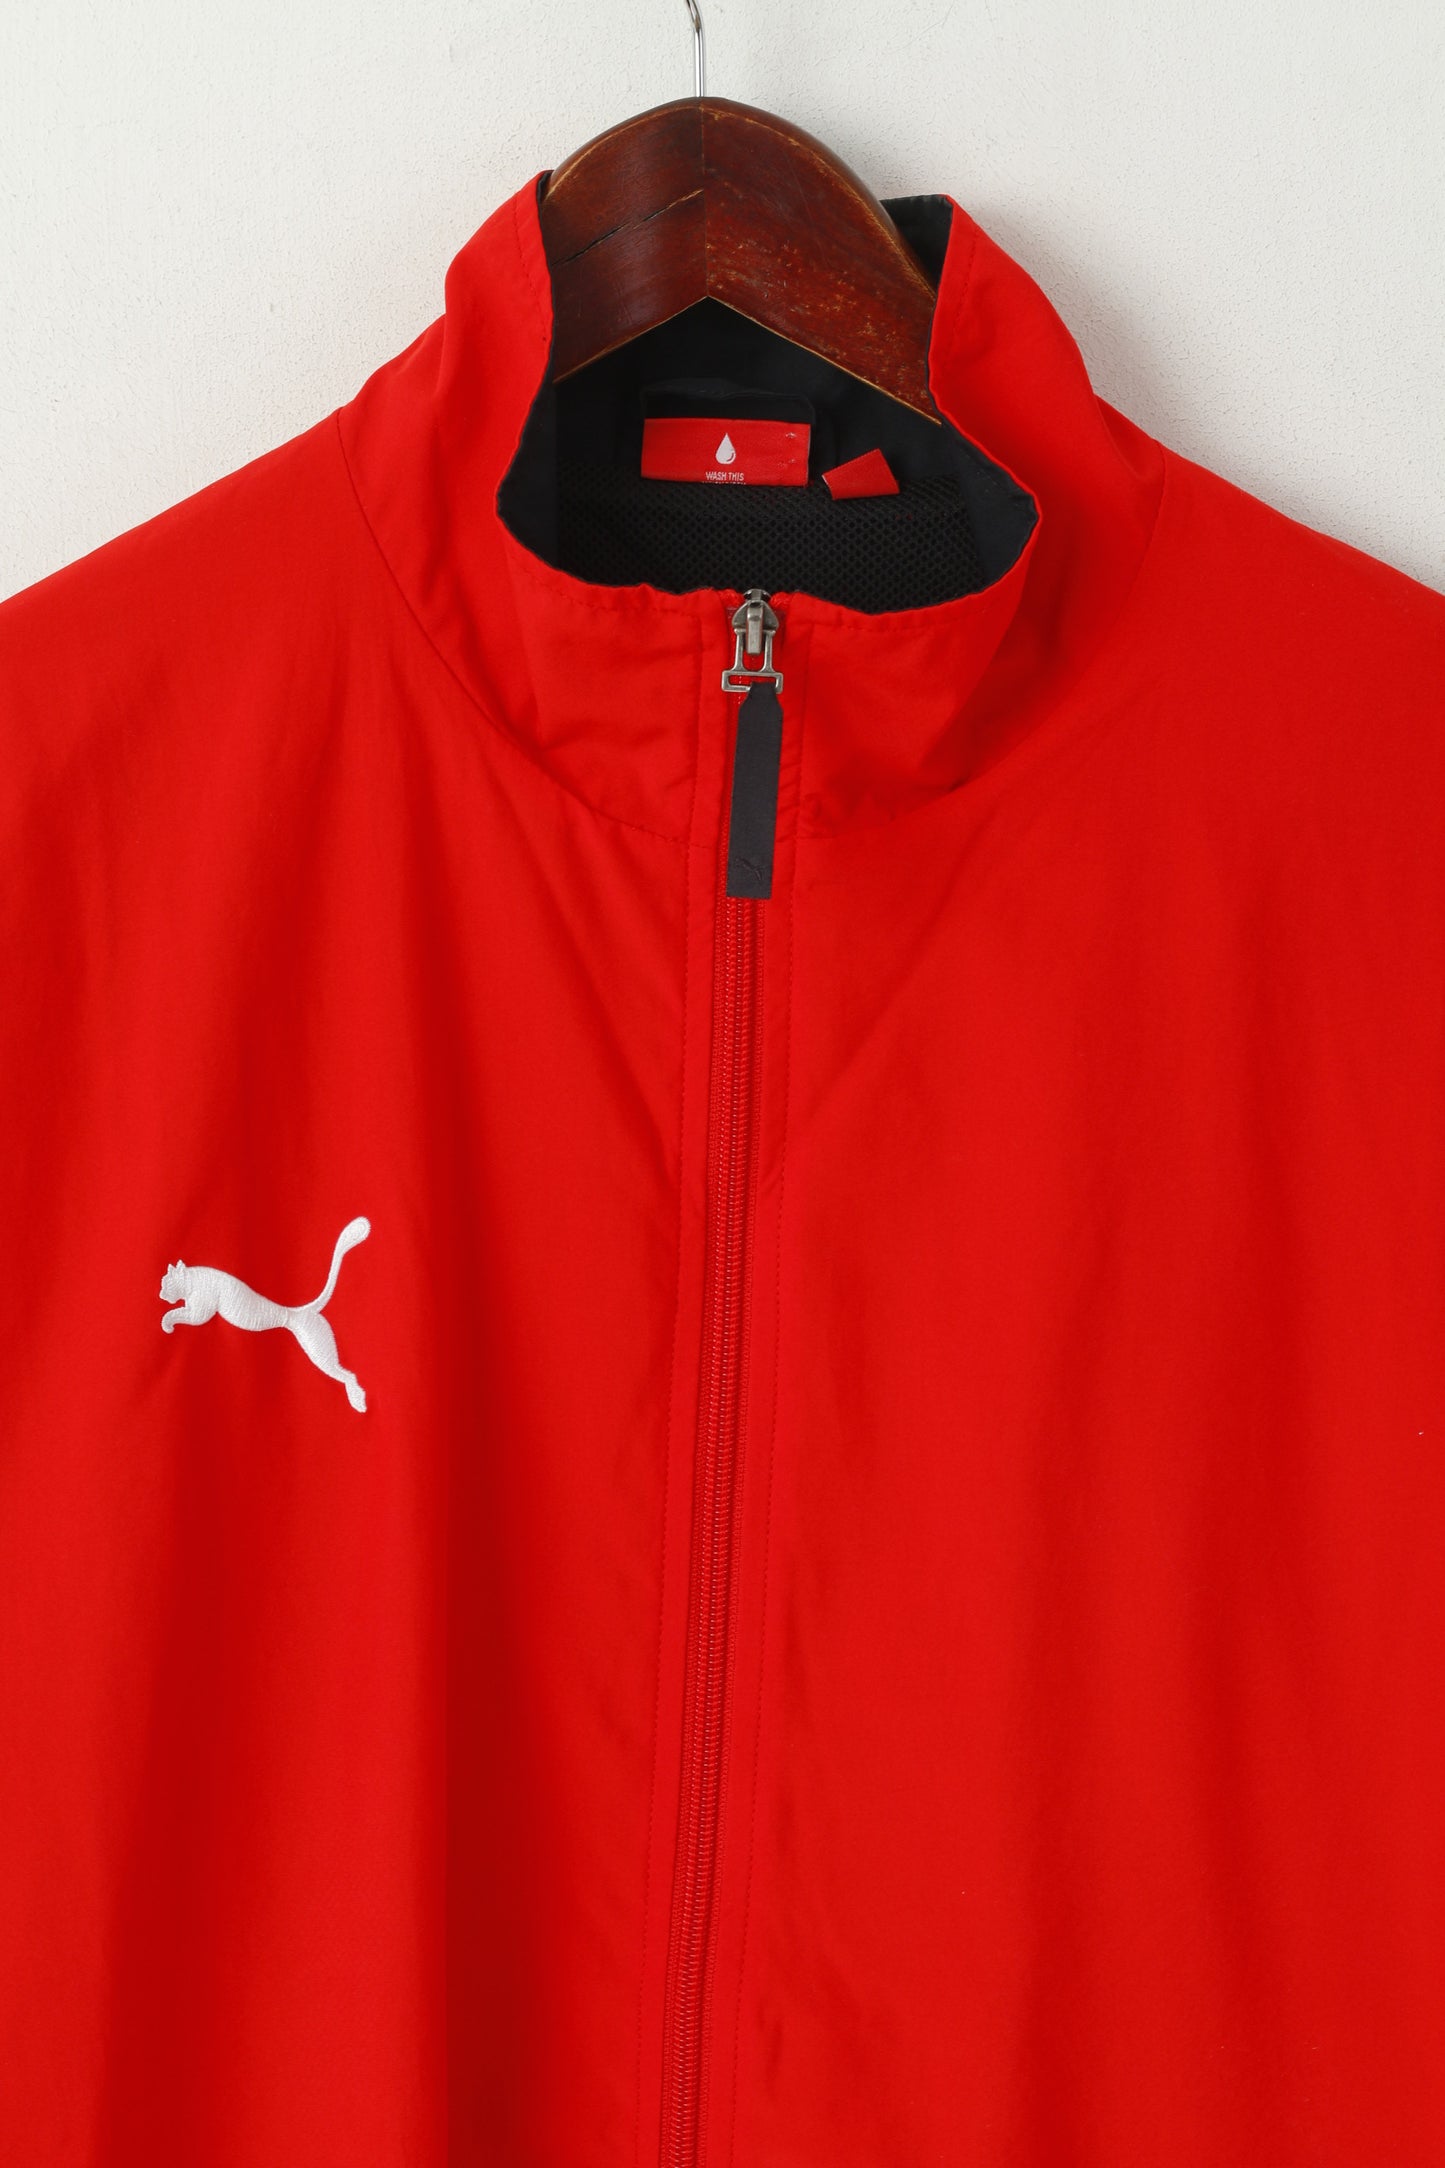 Puma Men L Jacket Red Sportswear Lightweight Full Zipper Activewear Track Top8